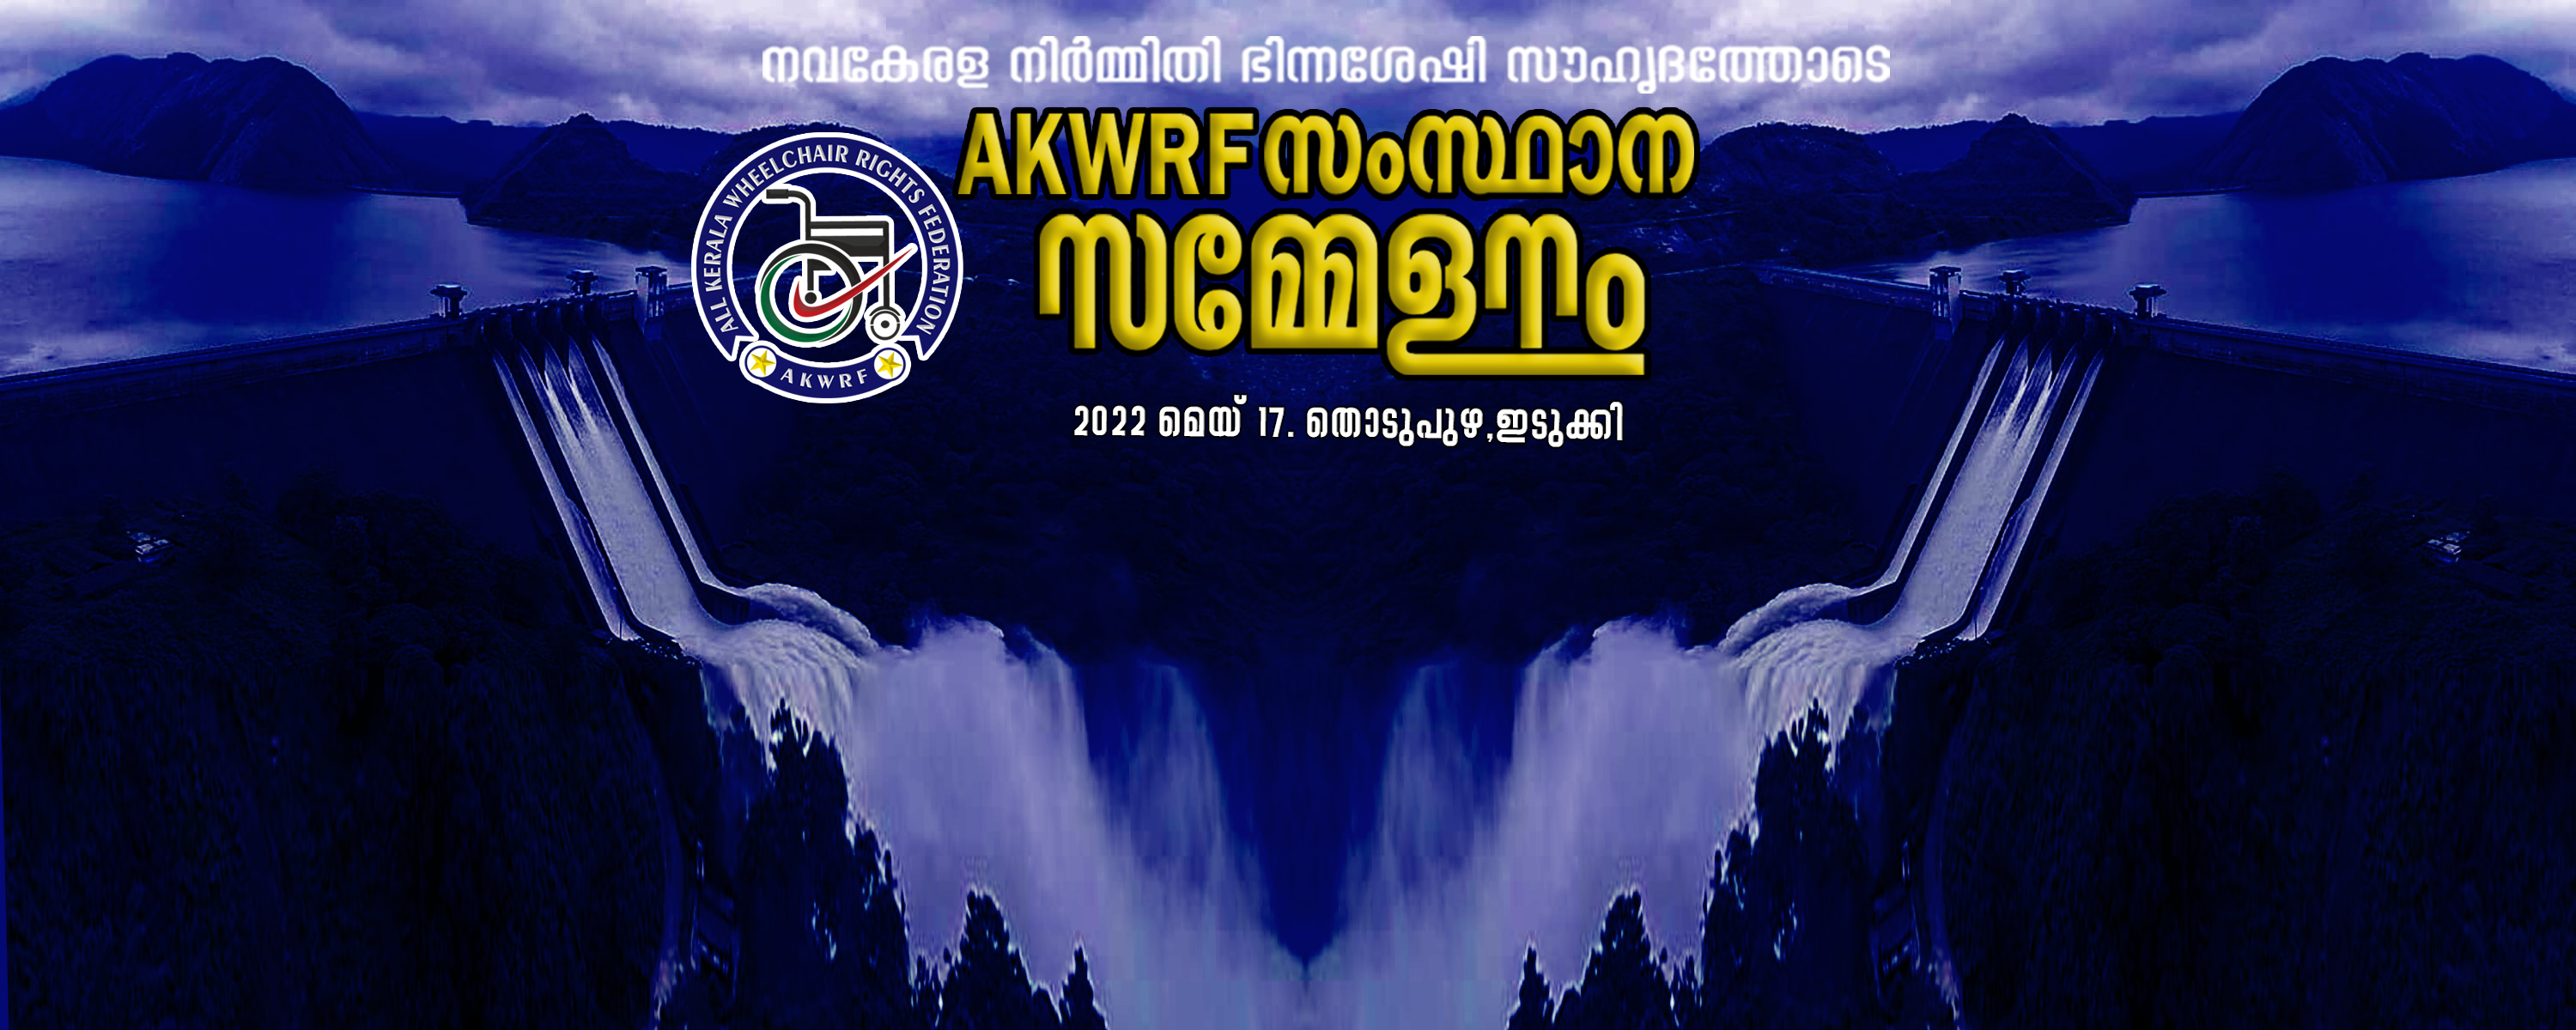 AKWRF Kerala